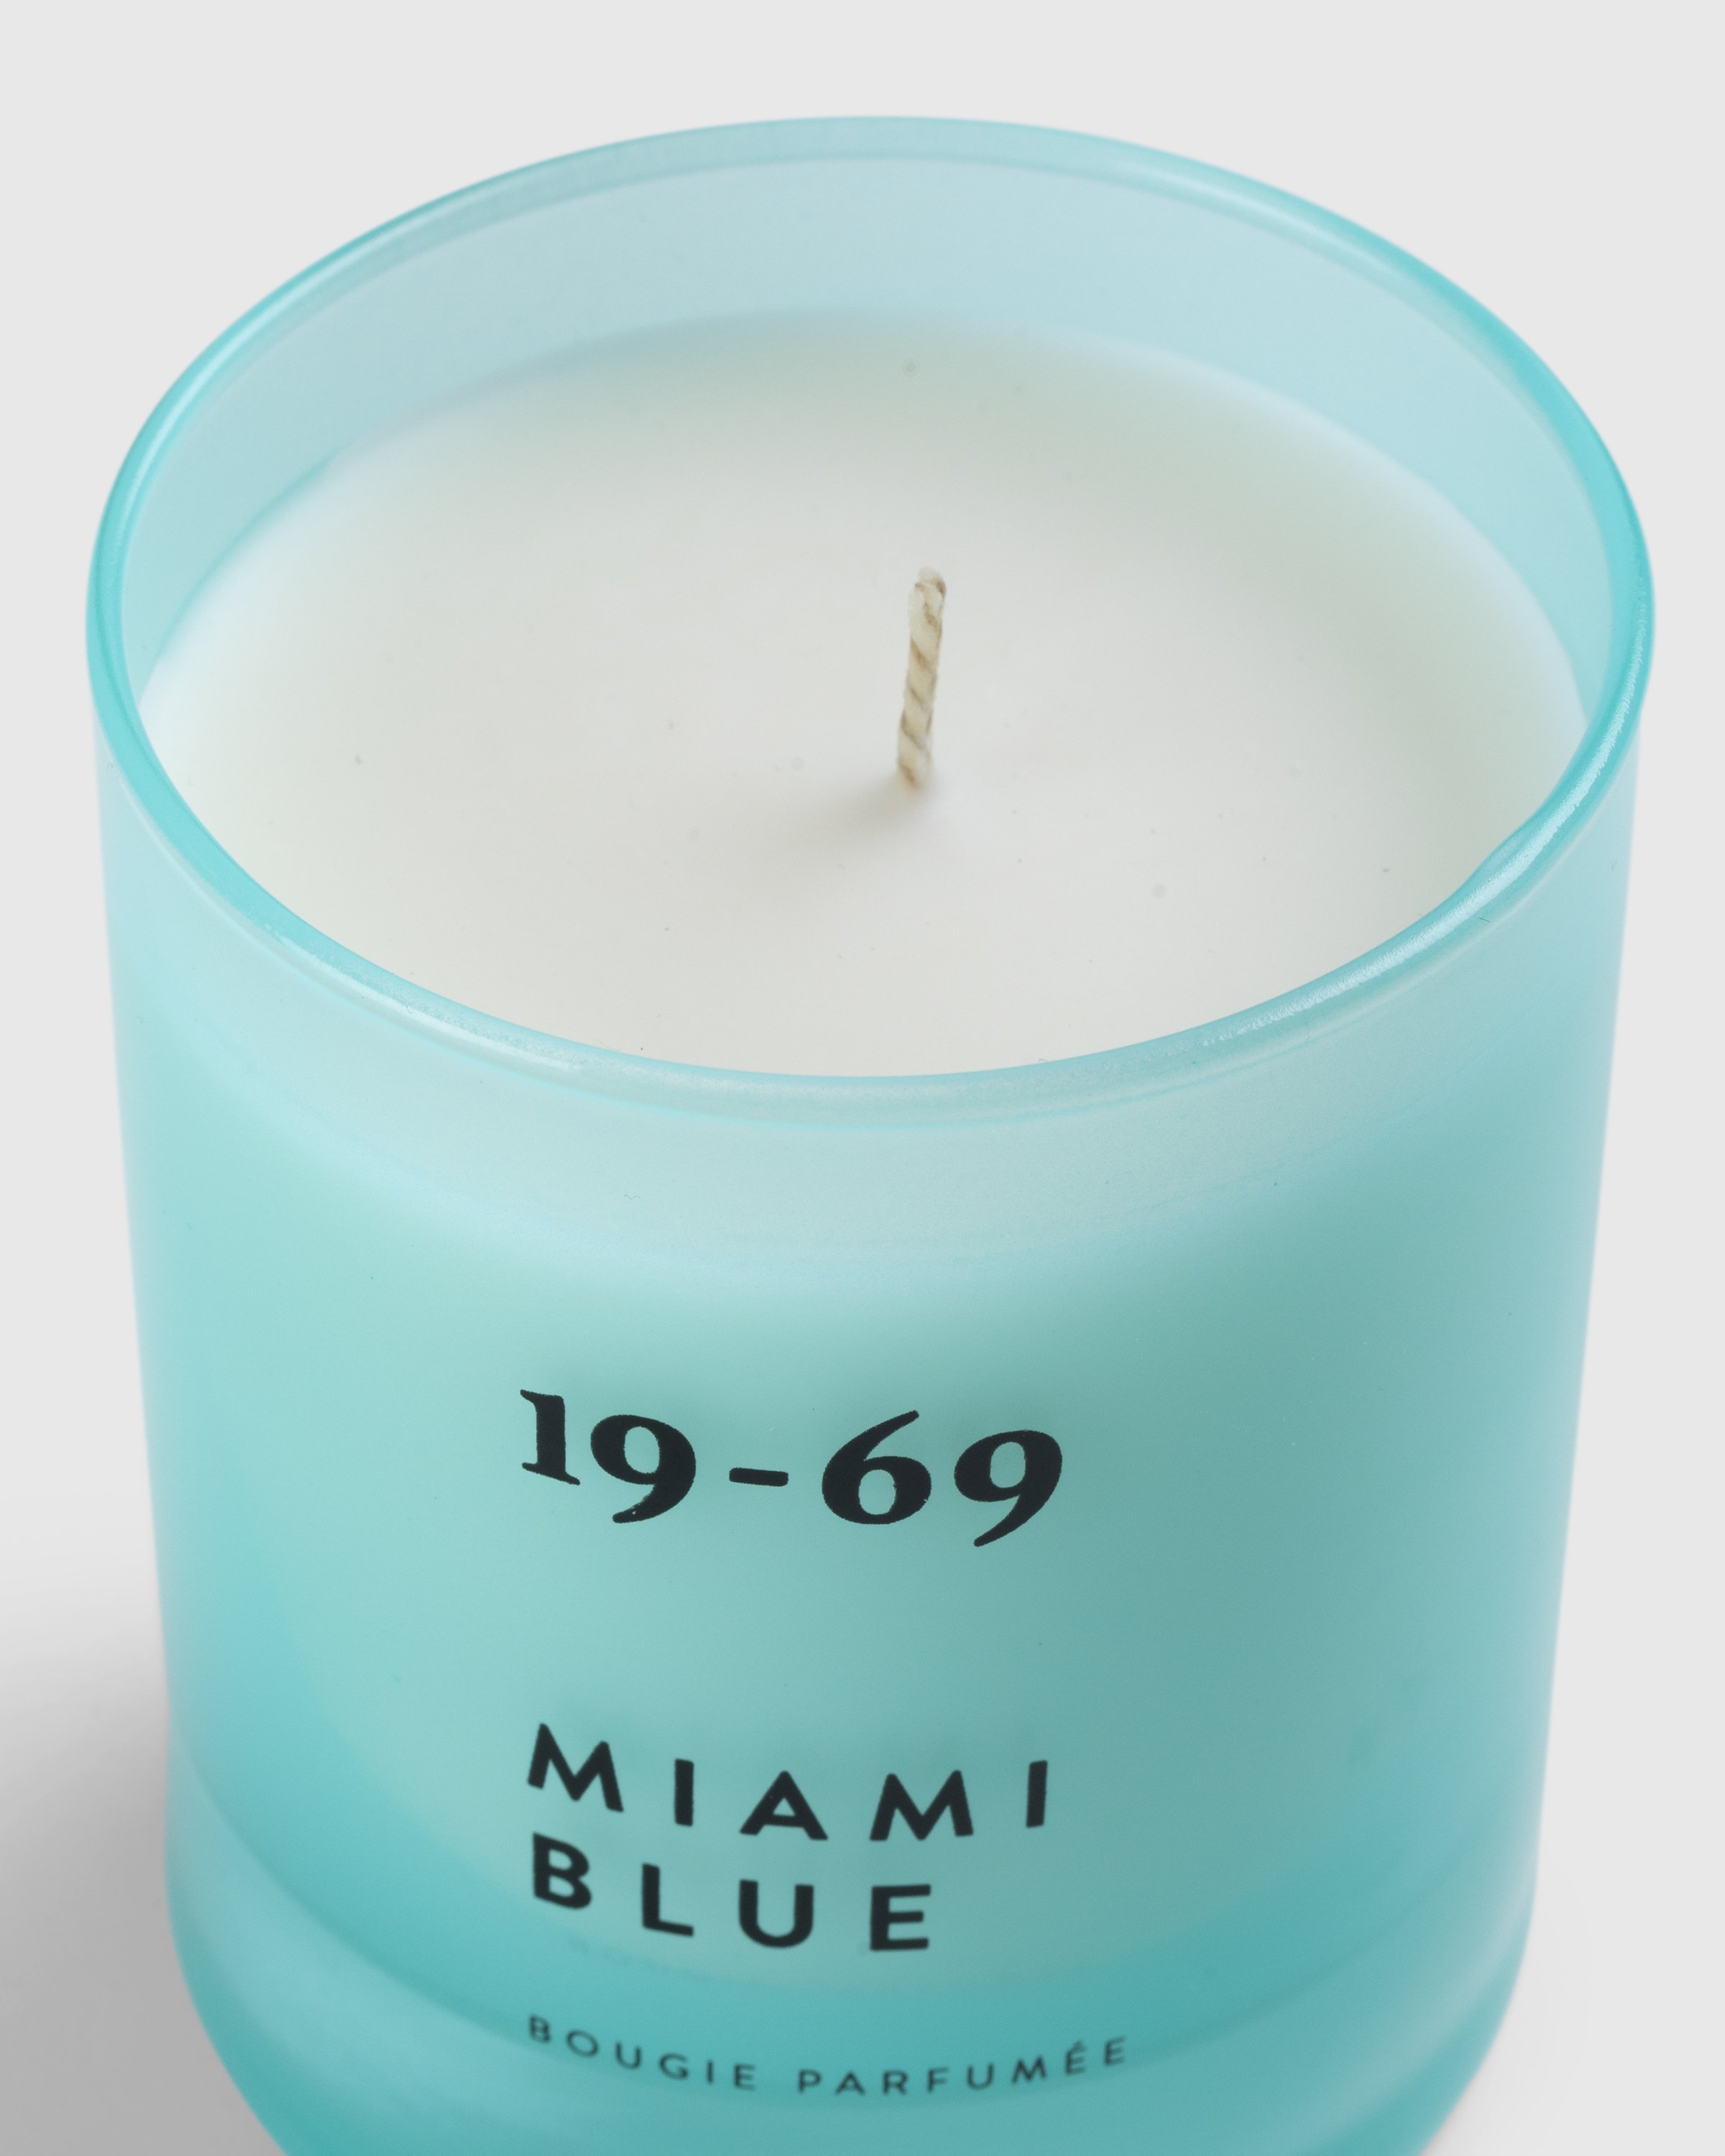 19-69 - Miami Blue BP Candle - Lifestyle - Blue - Image 3